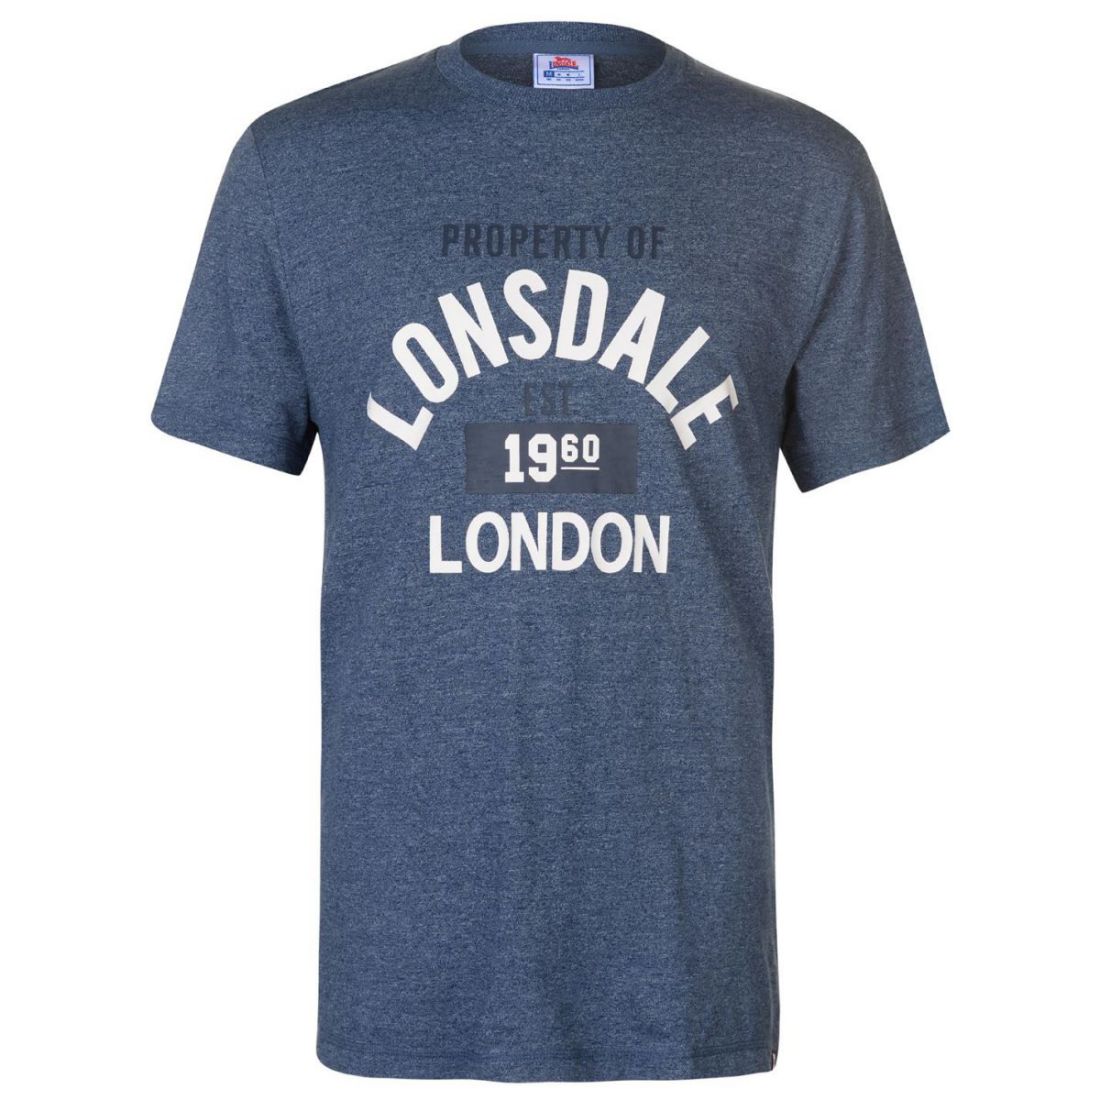 Lonsdale Marl T Shirt Mens Gents Crew Neck Tee Top | eBay